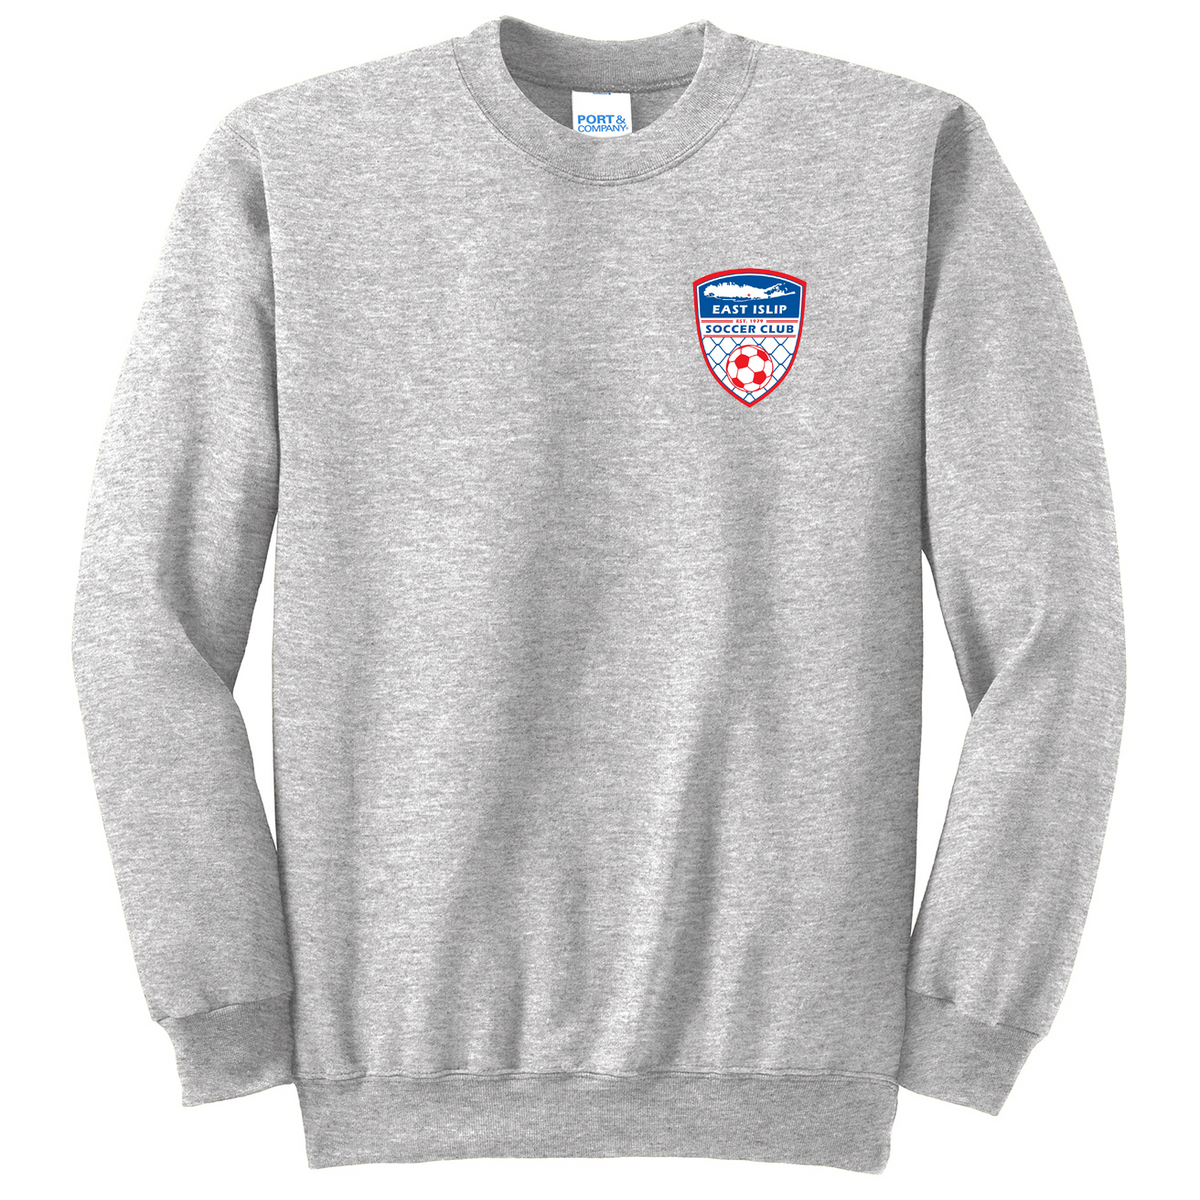 East Islip Soccer Club  Crew Neck Sweater